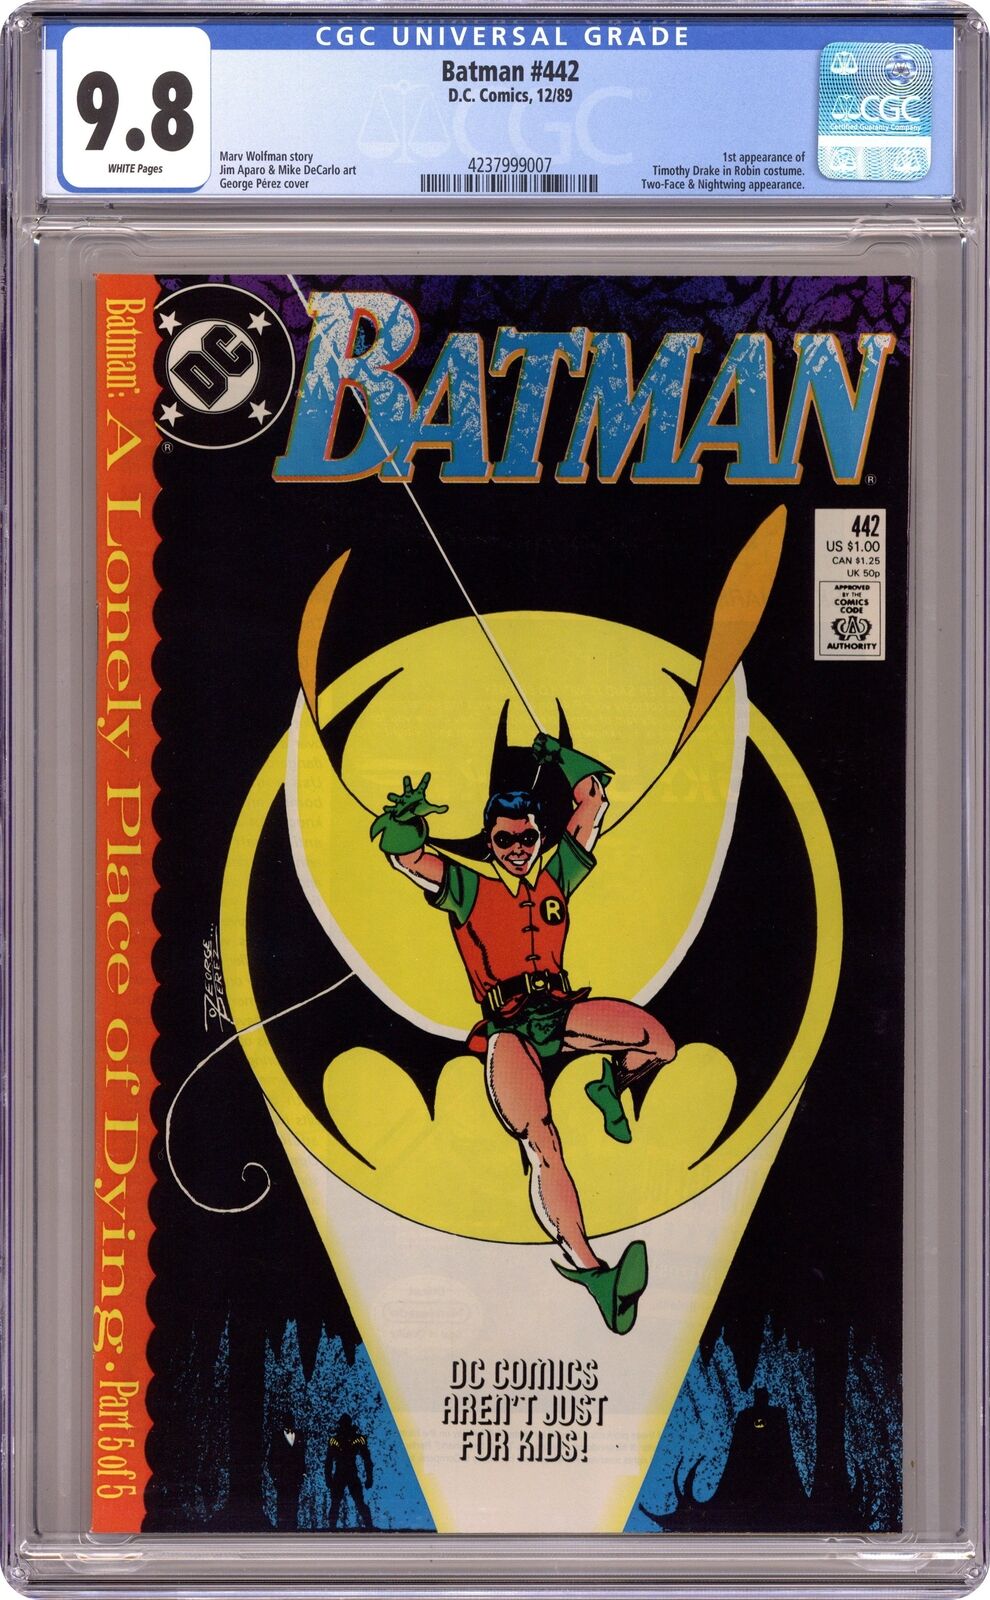 Batman #442 CGC 9.8 1989 4237999007 1st app. Tim Drake as Robin